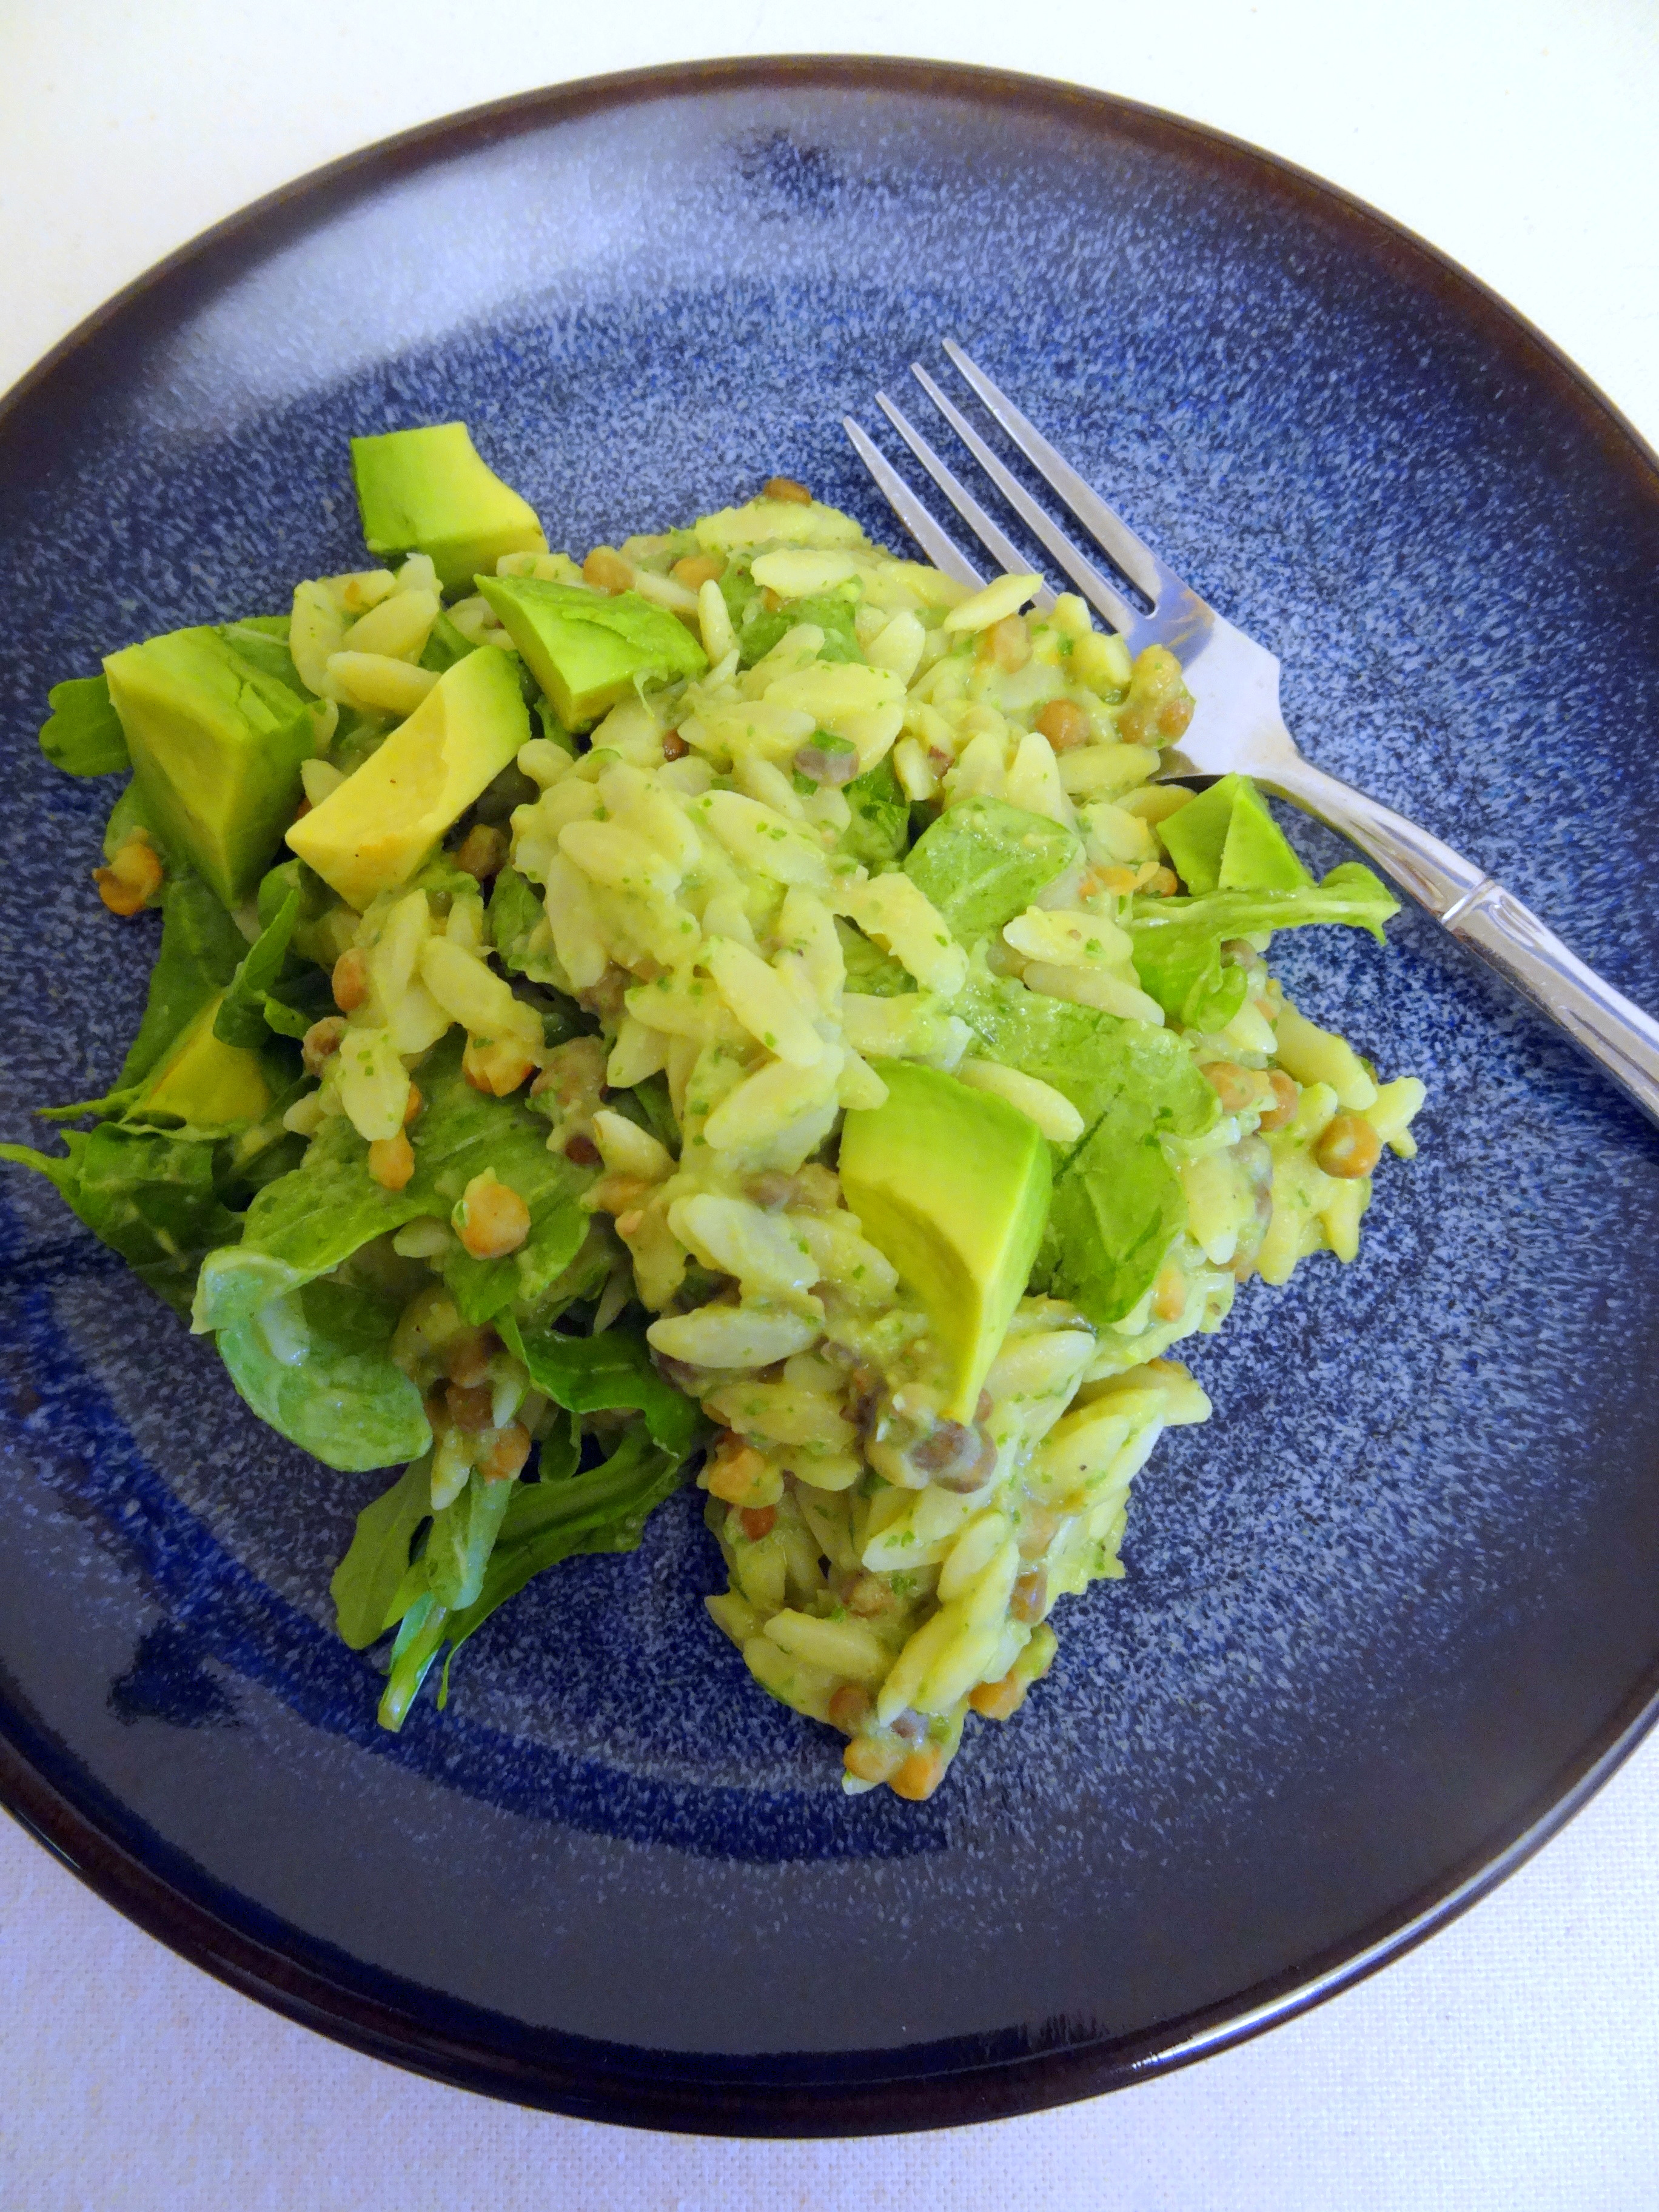 lemony avocado orzo salad with lentils